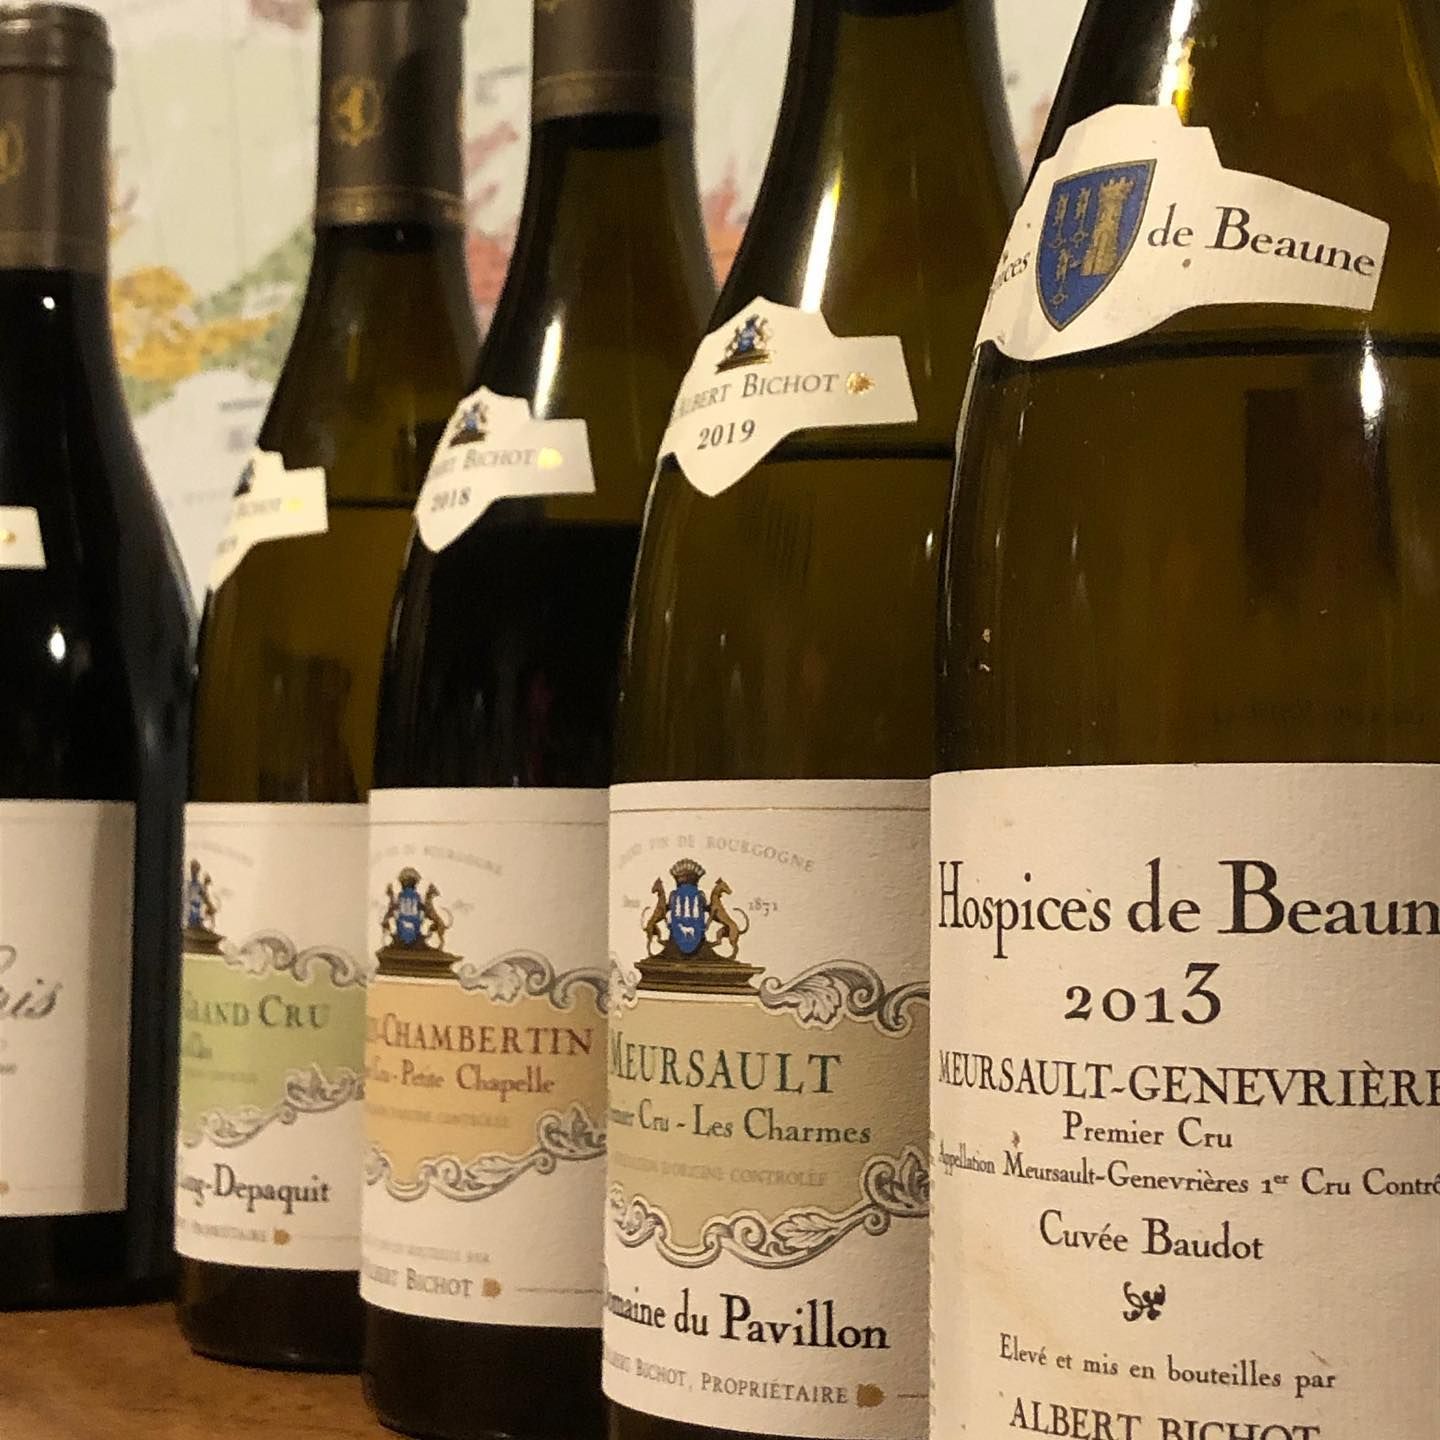 
World's Oldest Charity Wine Auction: The Hospices de Beaune wine auction